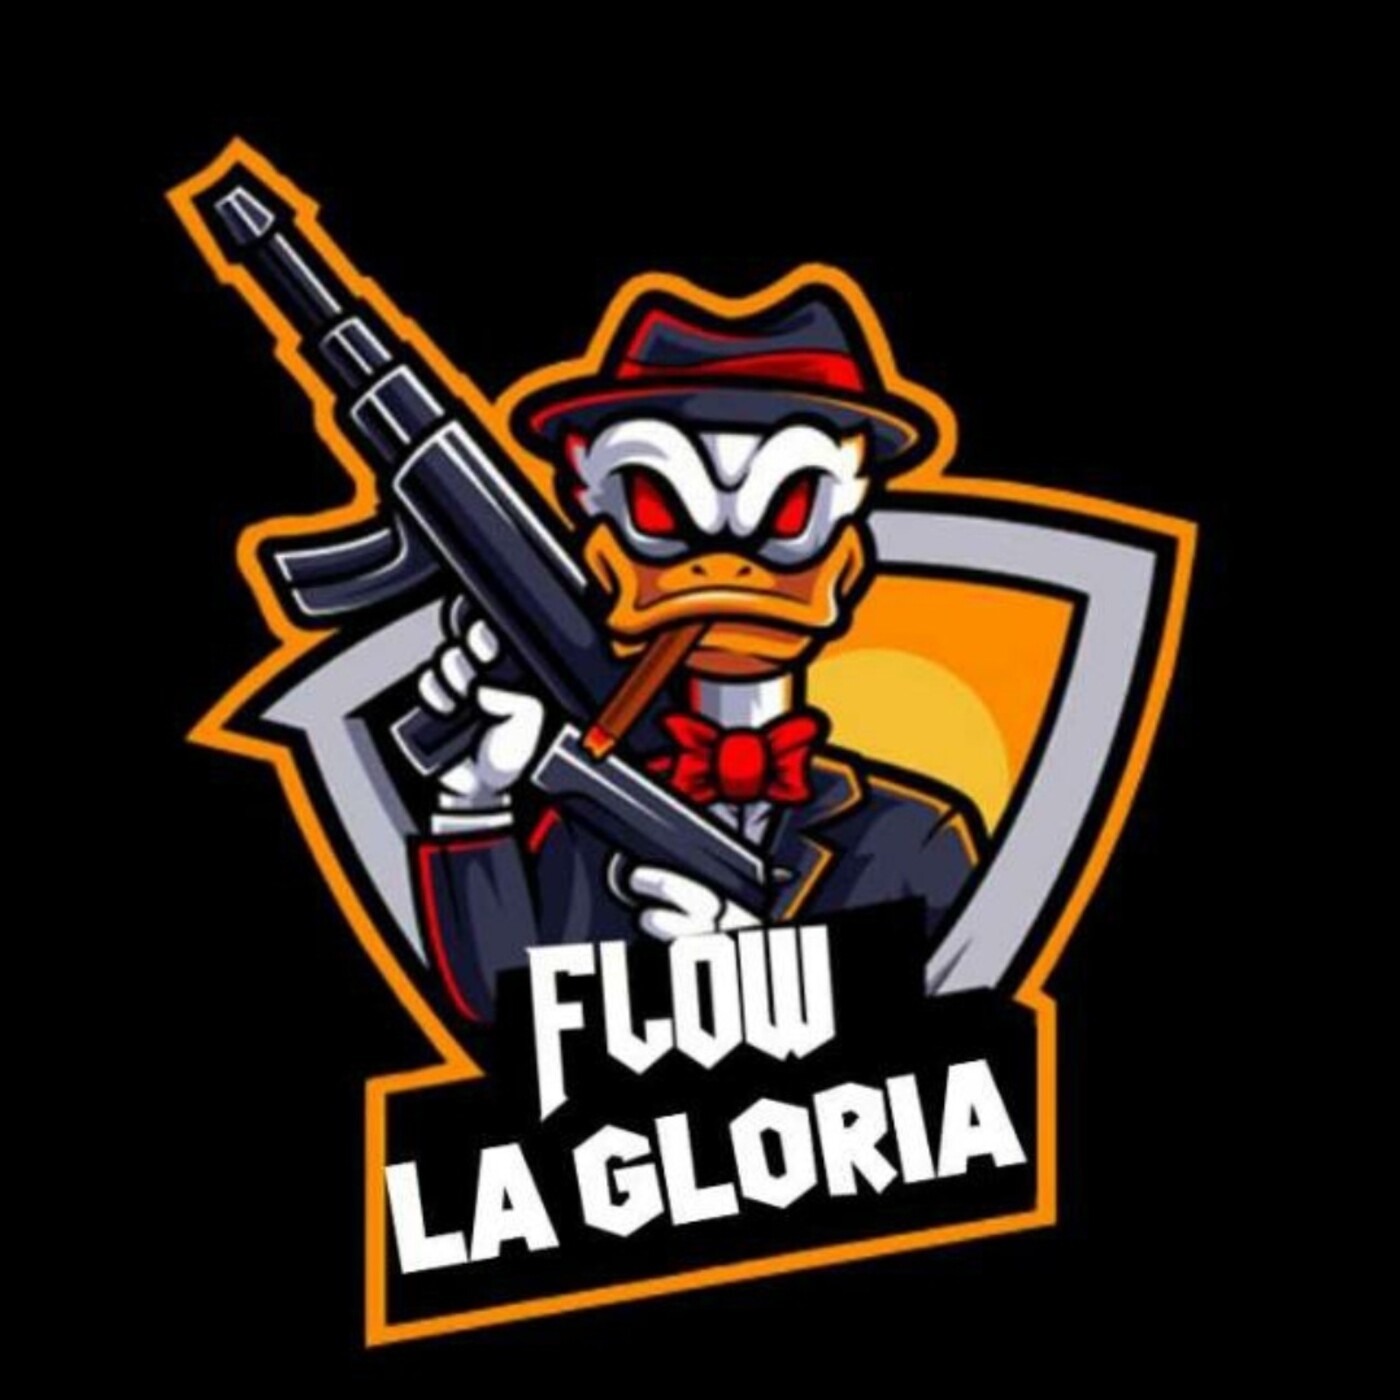 FLOW LA GLORIA 2020